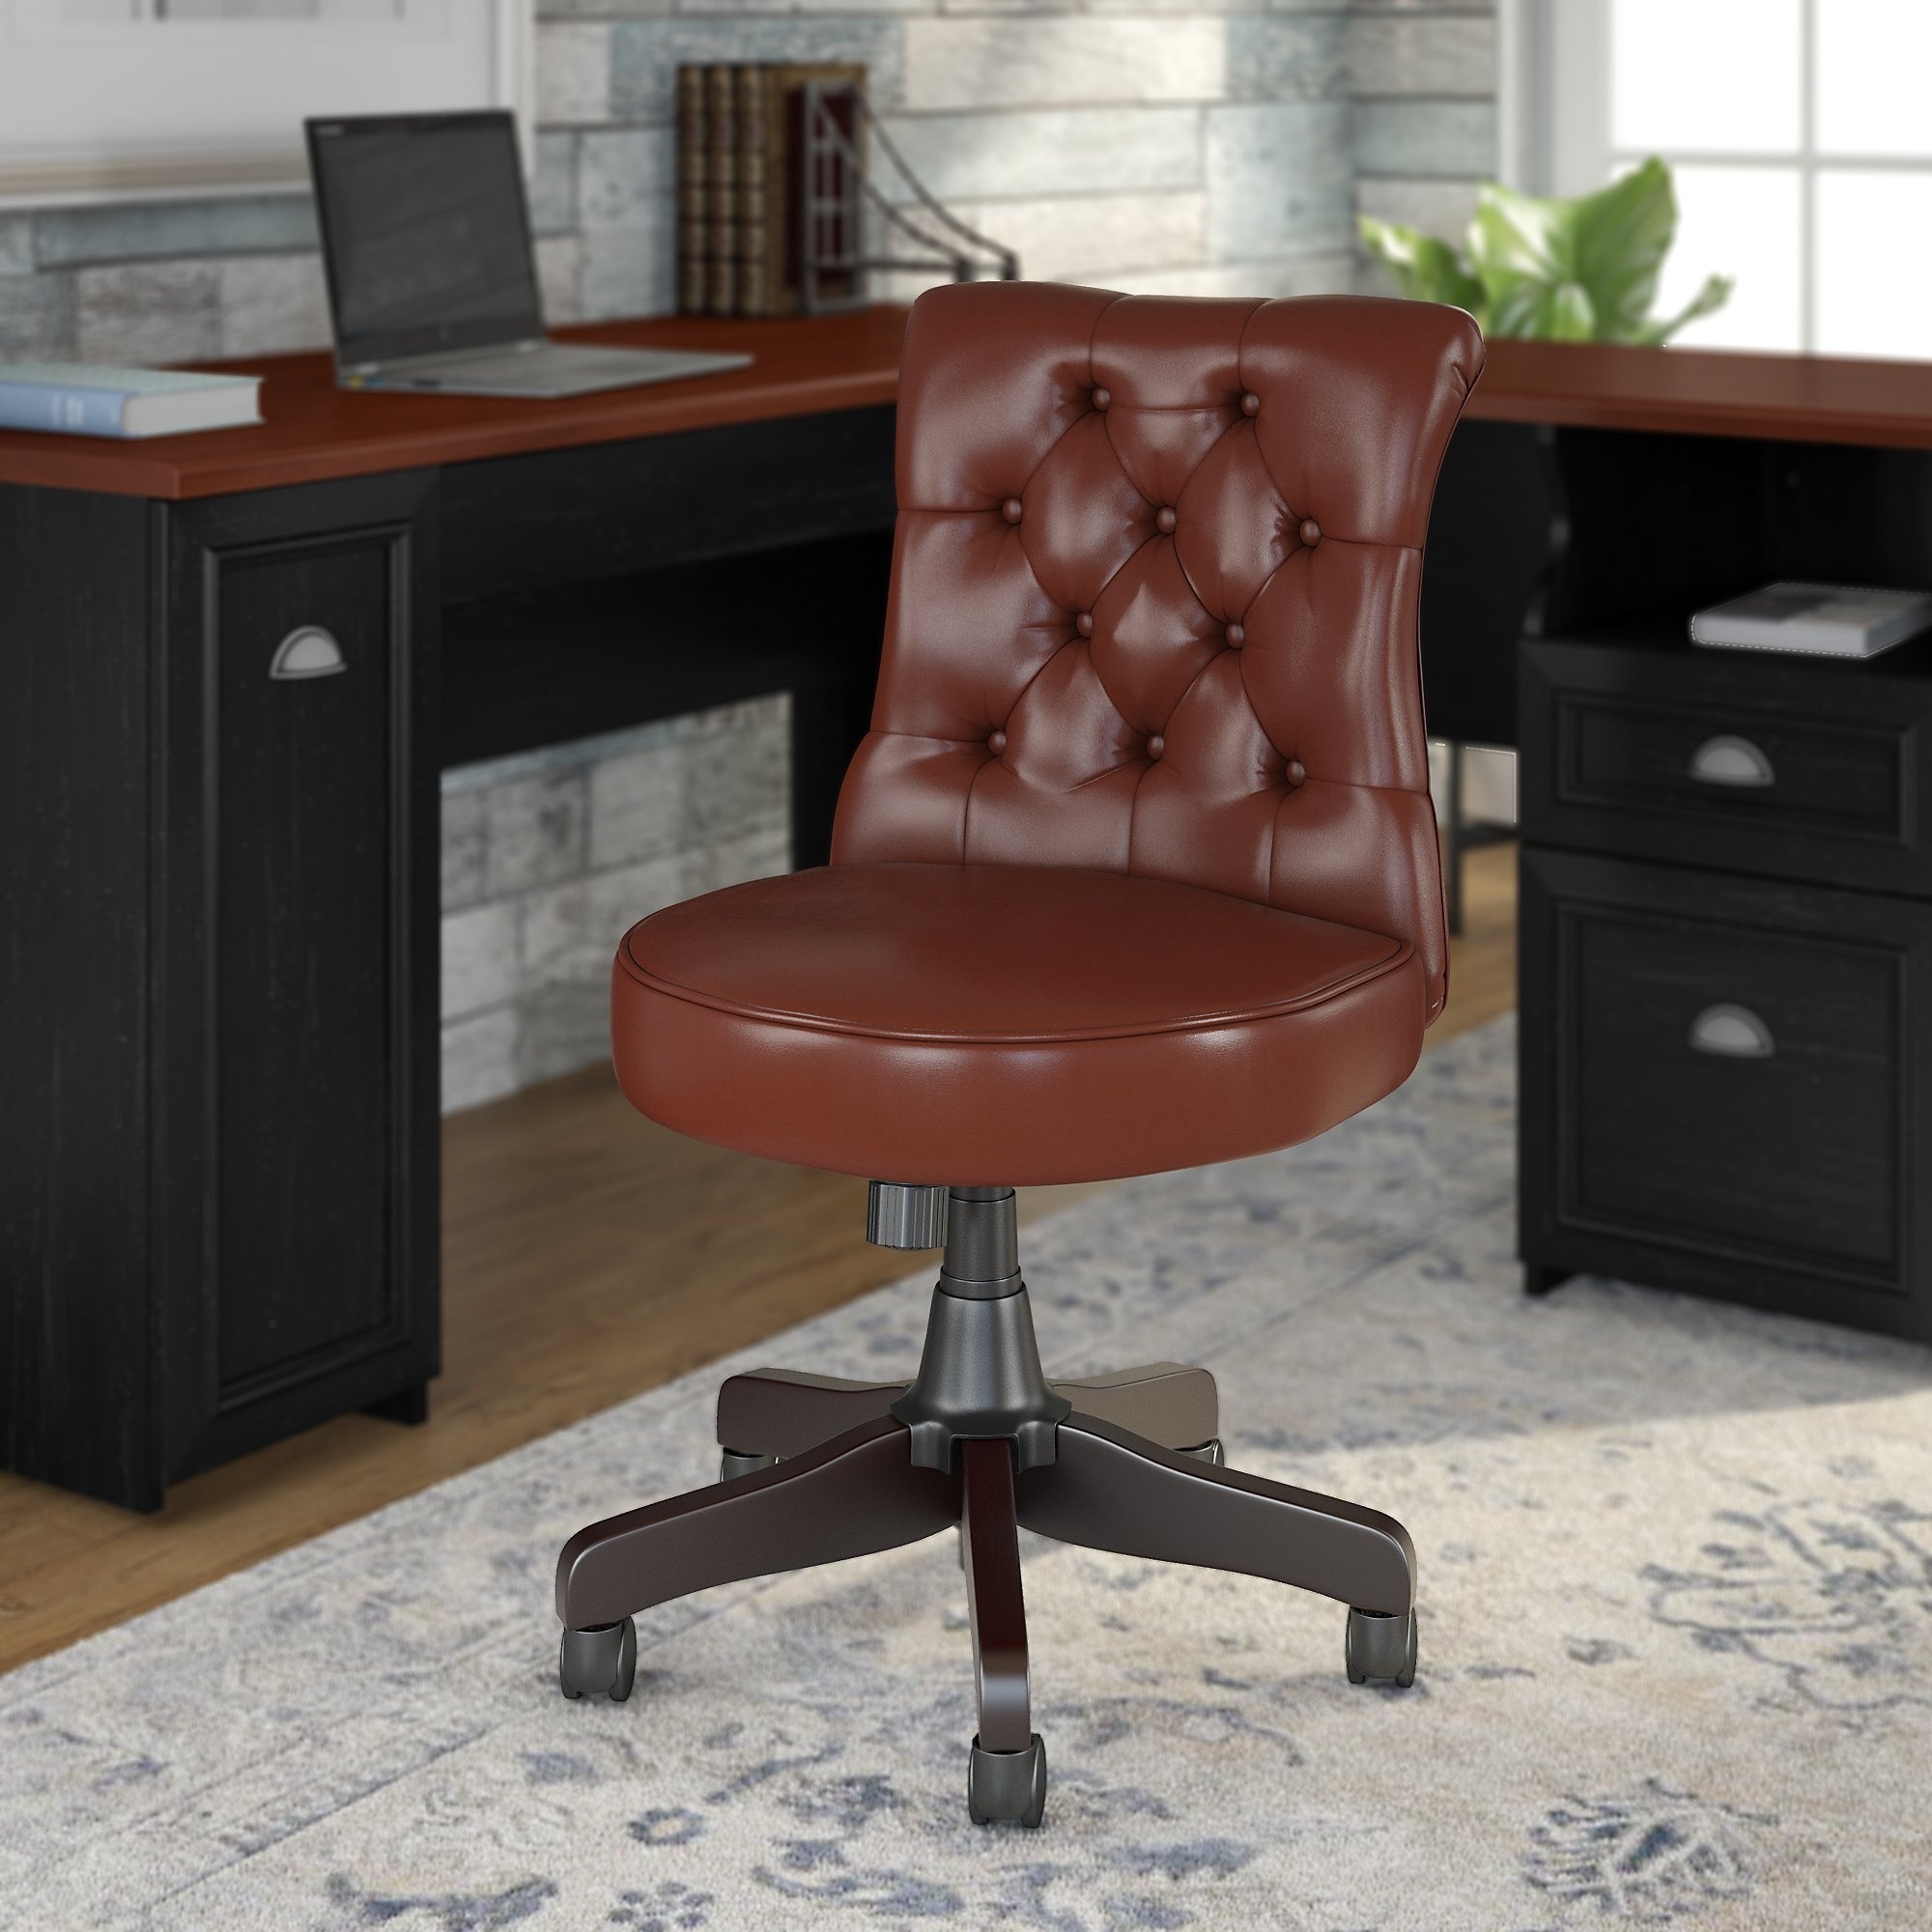 Copper Grove Pleven Mid-back Tufted Office Chair - 22.05"L x 25.79"W x 33.66"H - 22.05"L x 25.79"W x 33.66"H